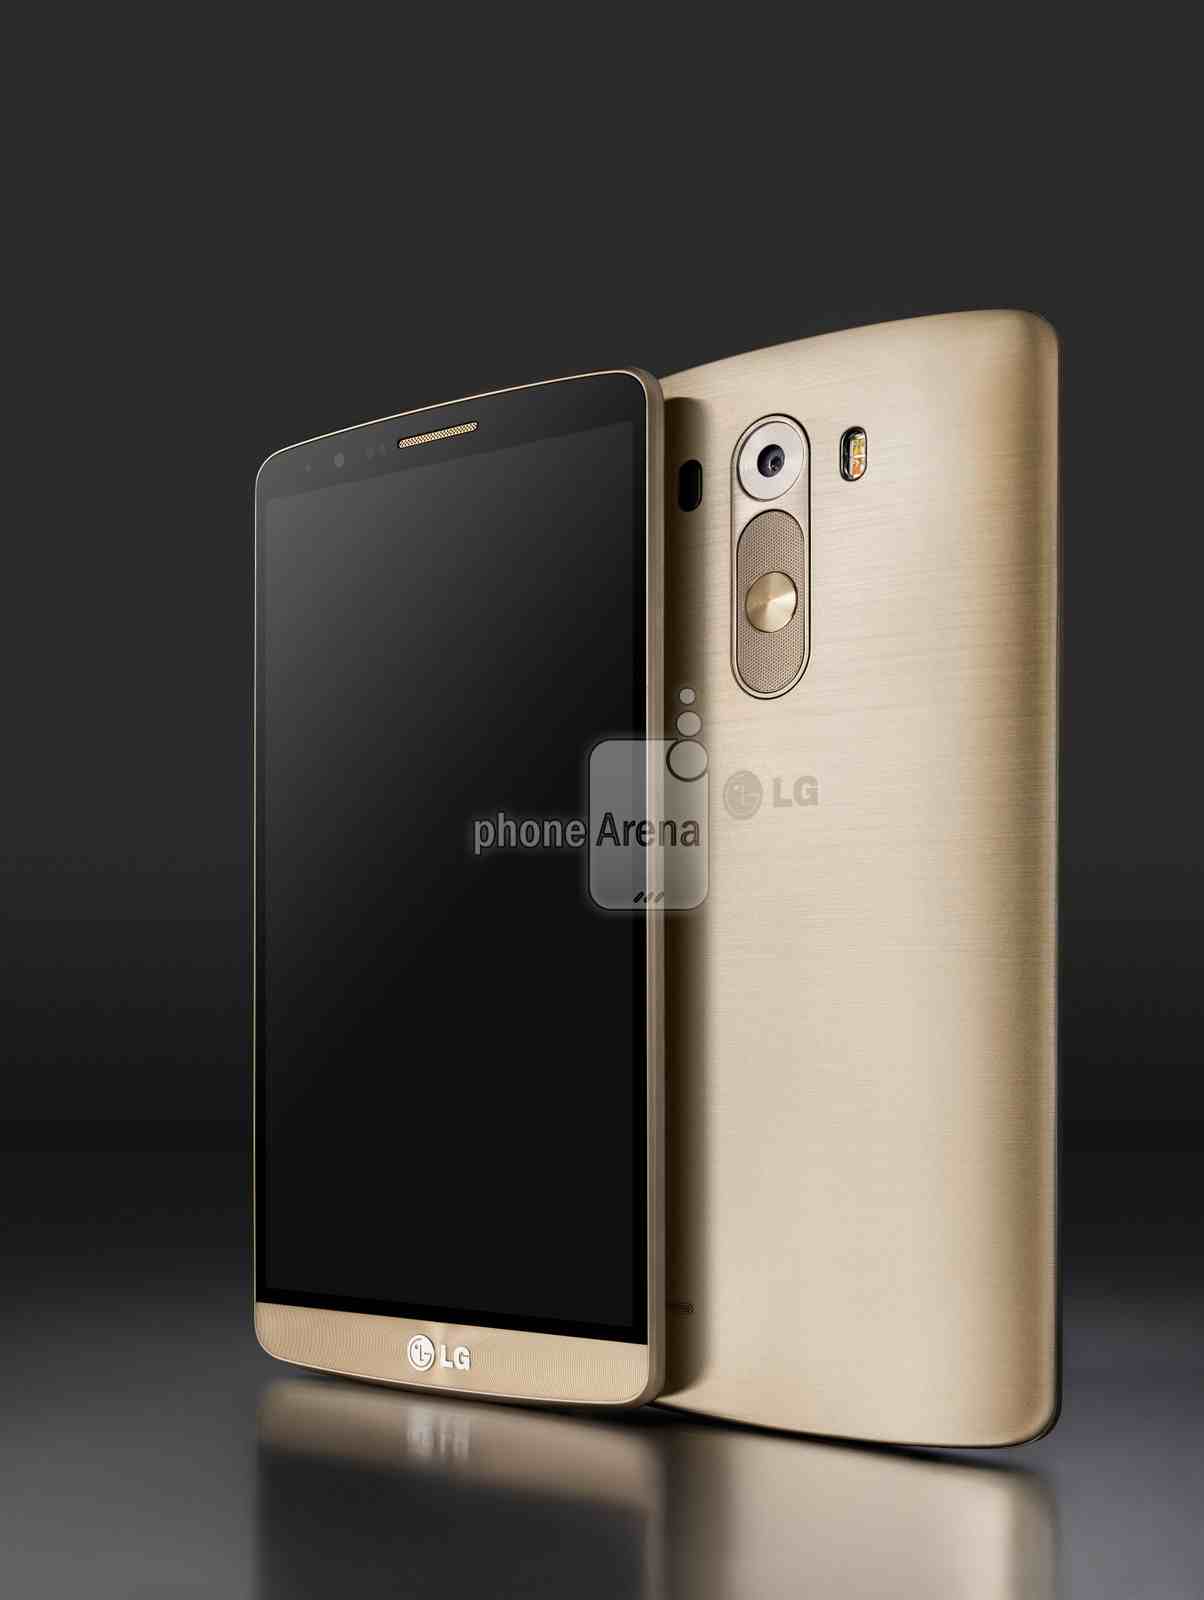 LG G3 press images